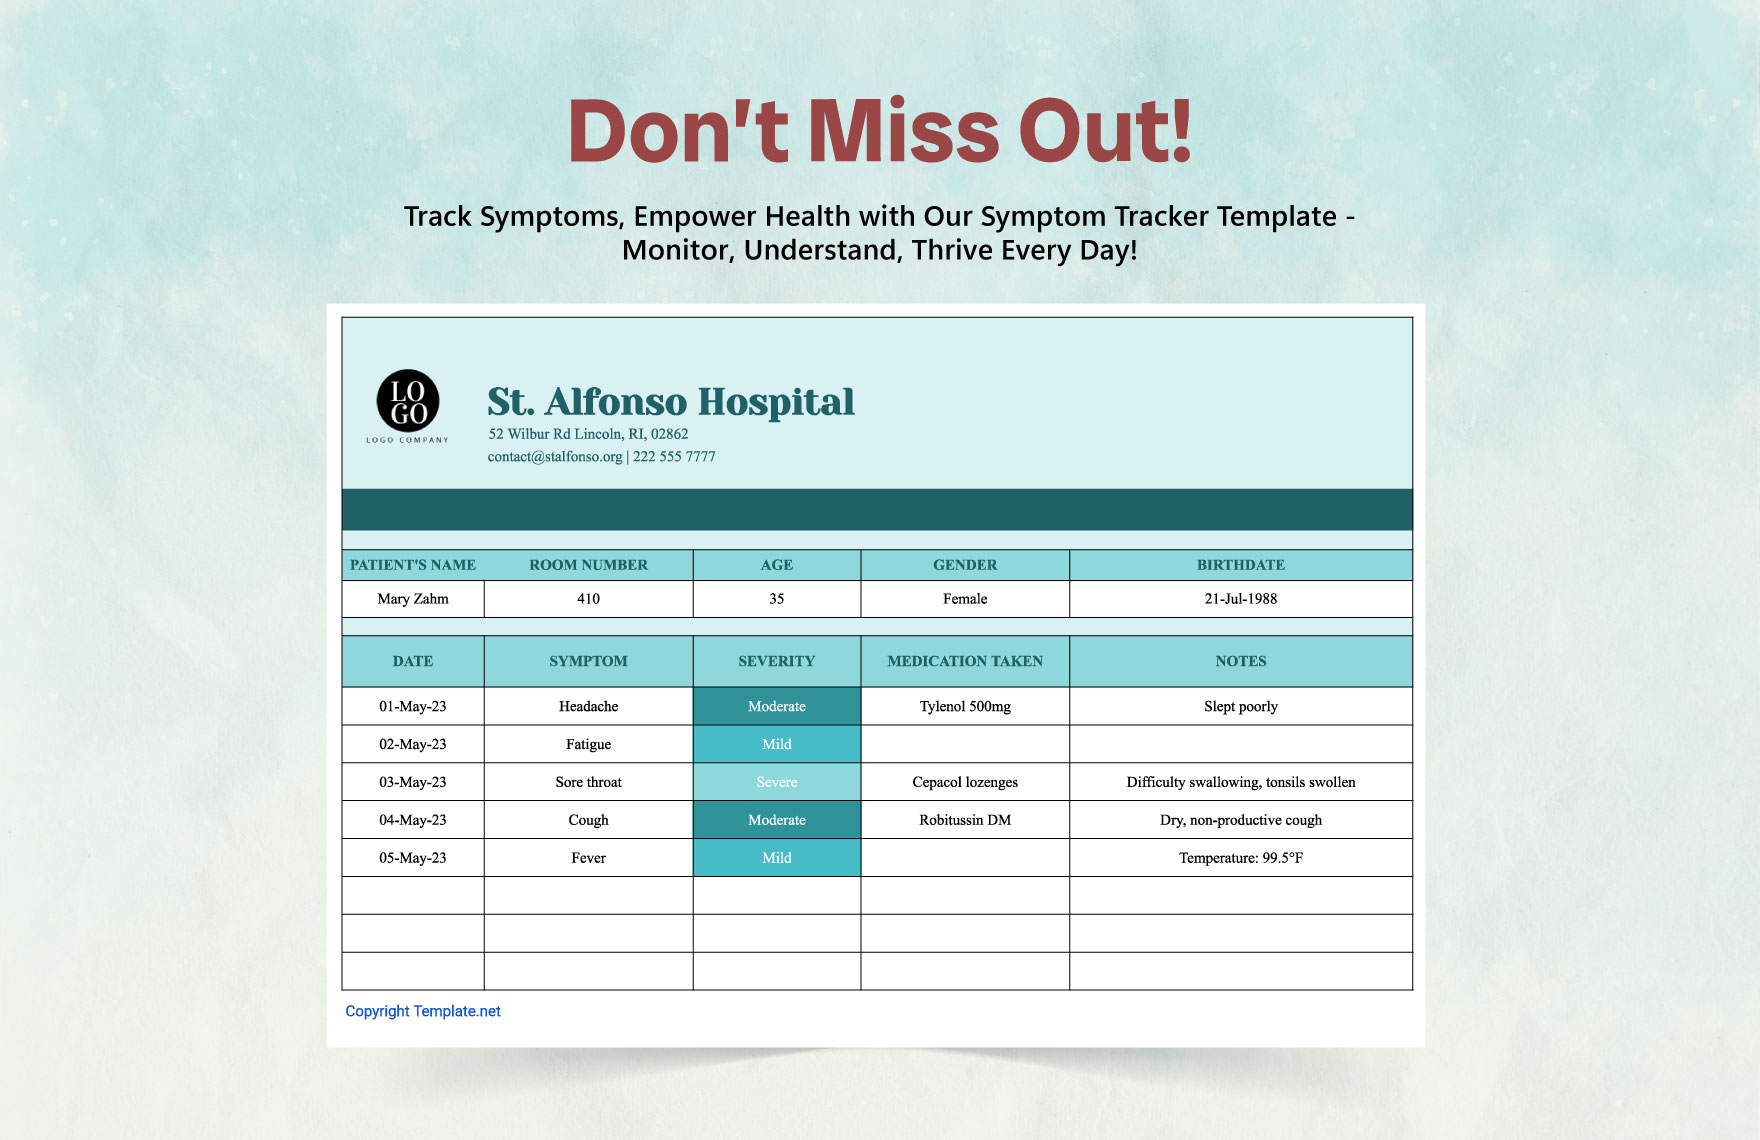 Symptom Tracker Template